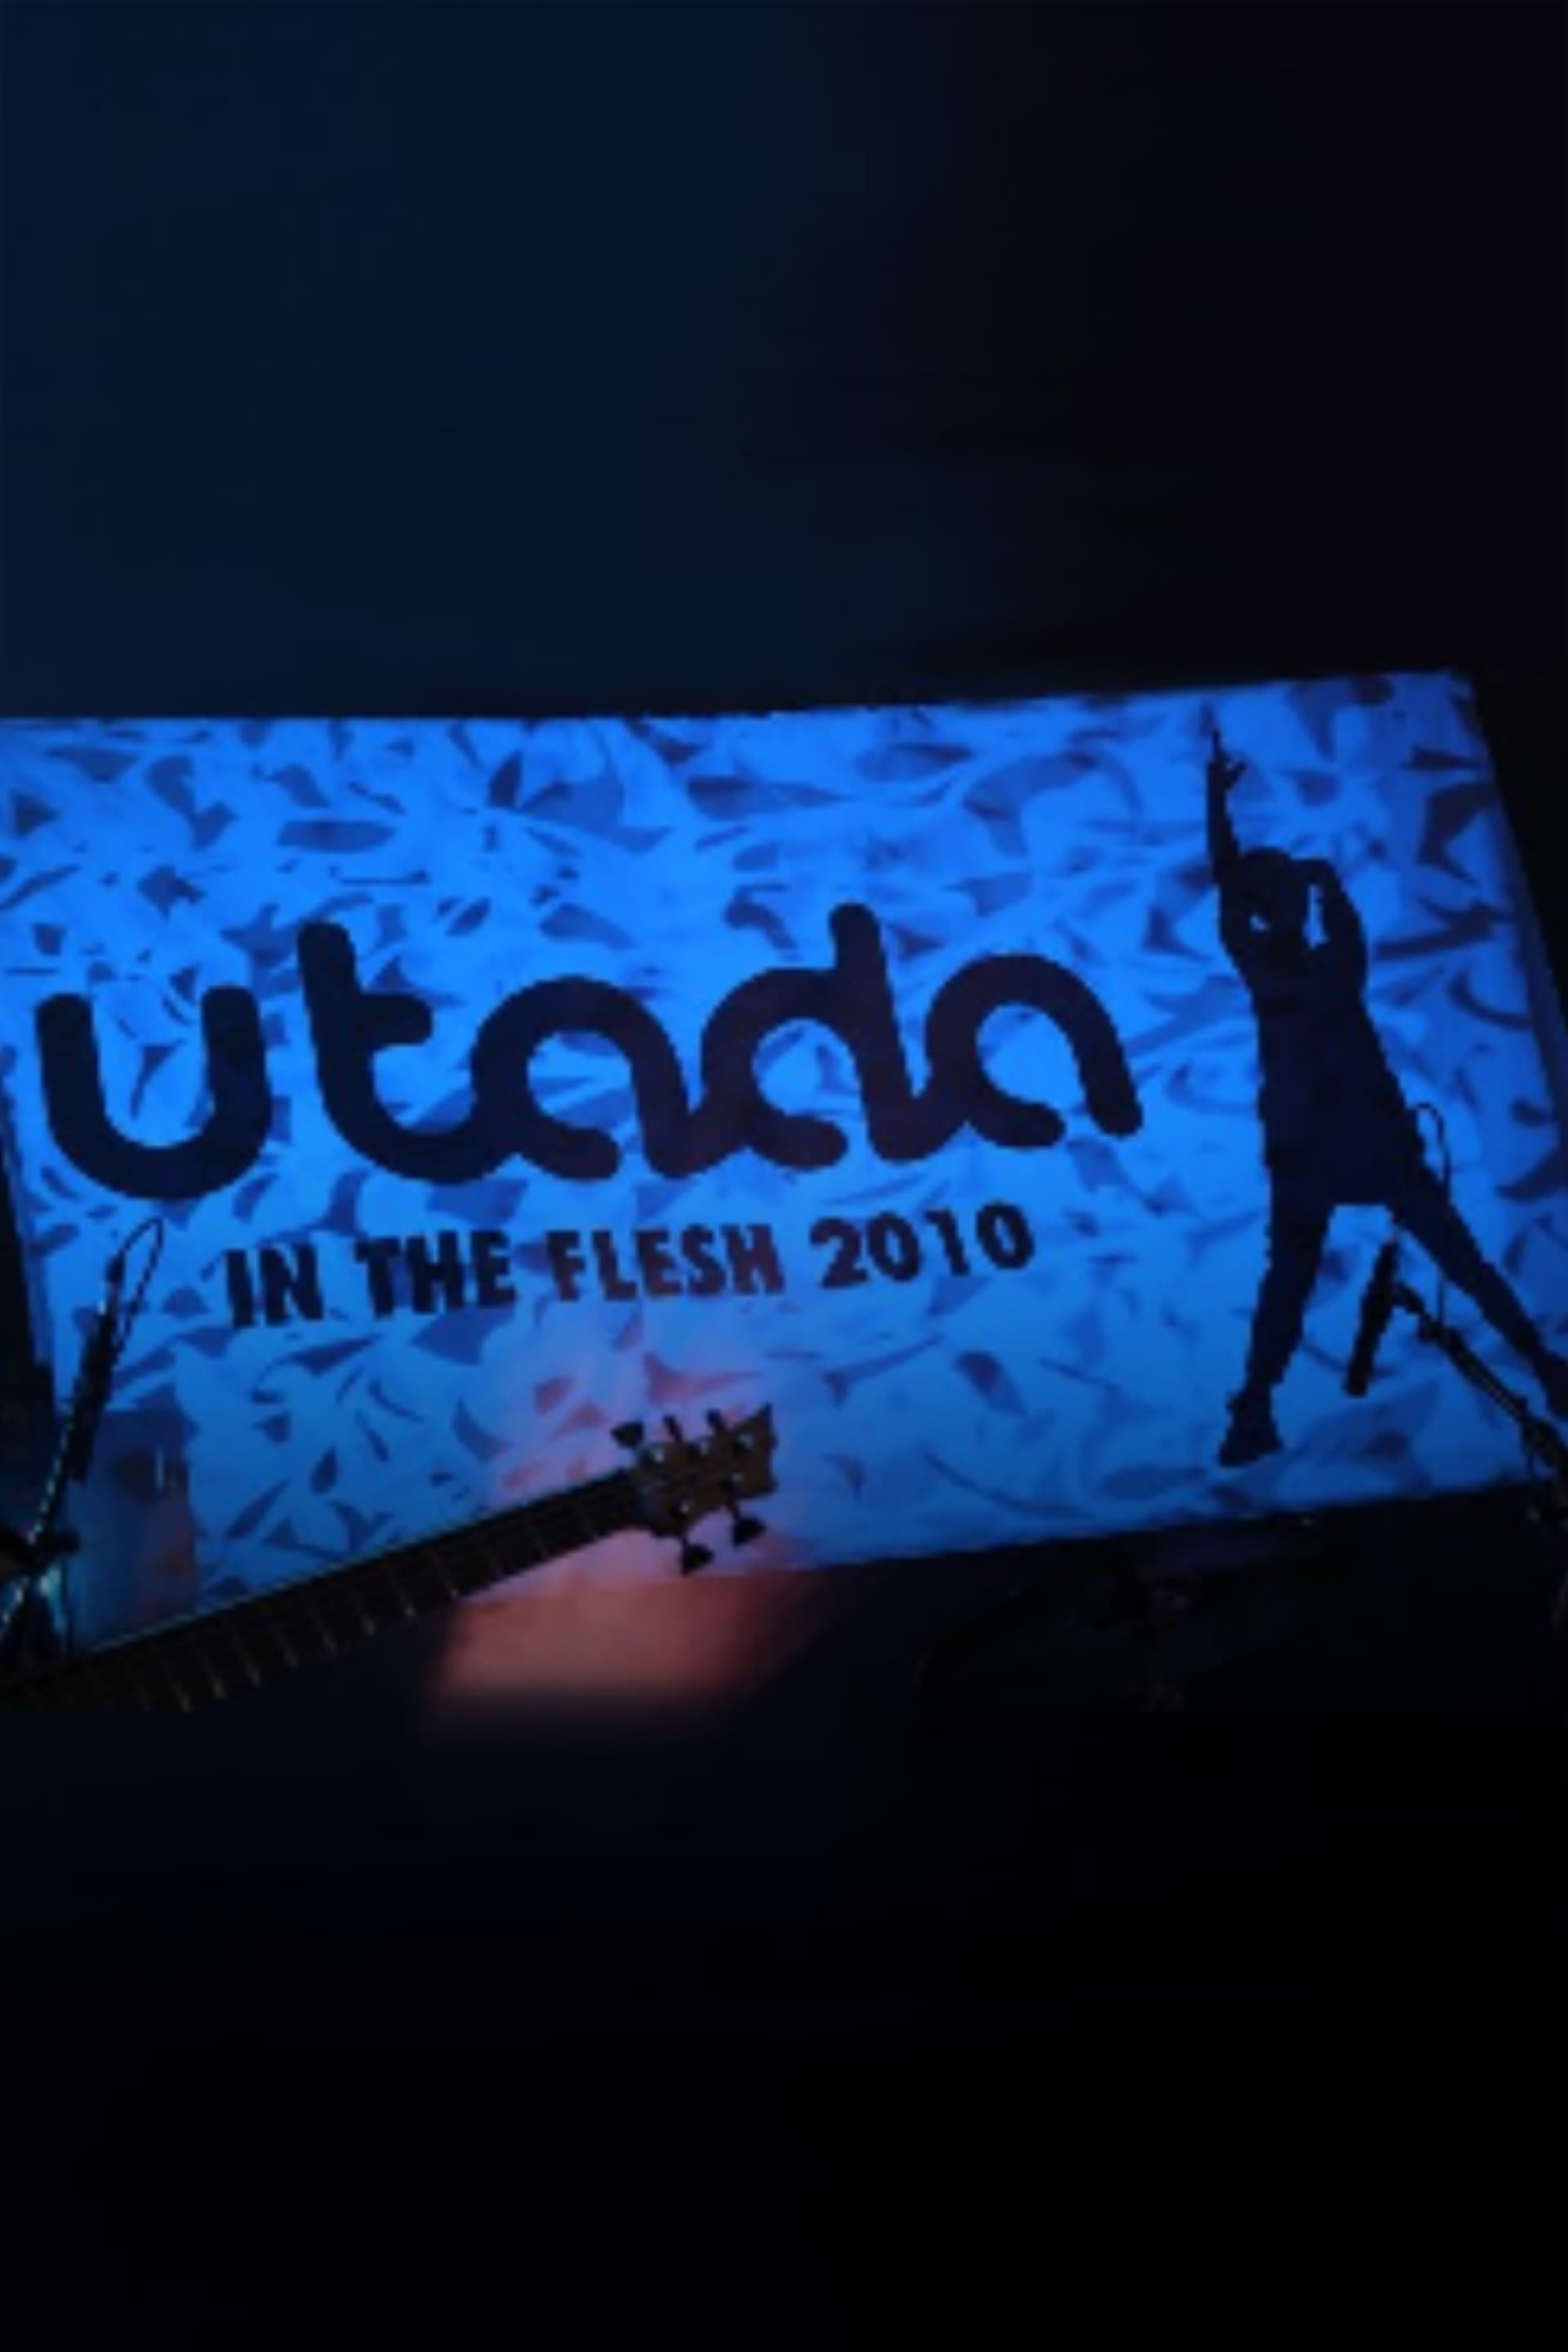 Utada: In the Flesh 2010